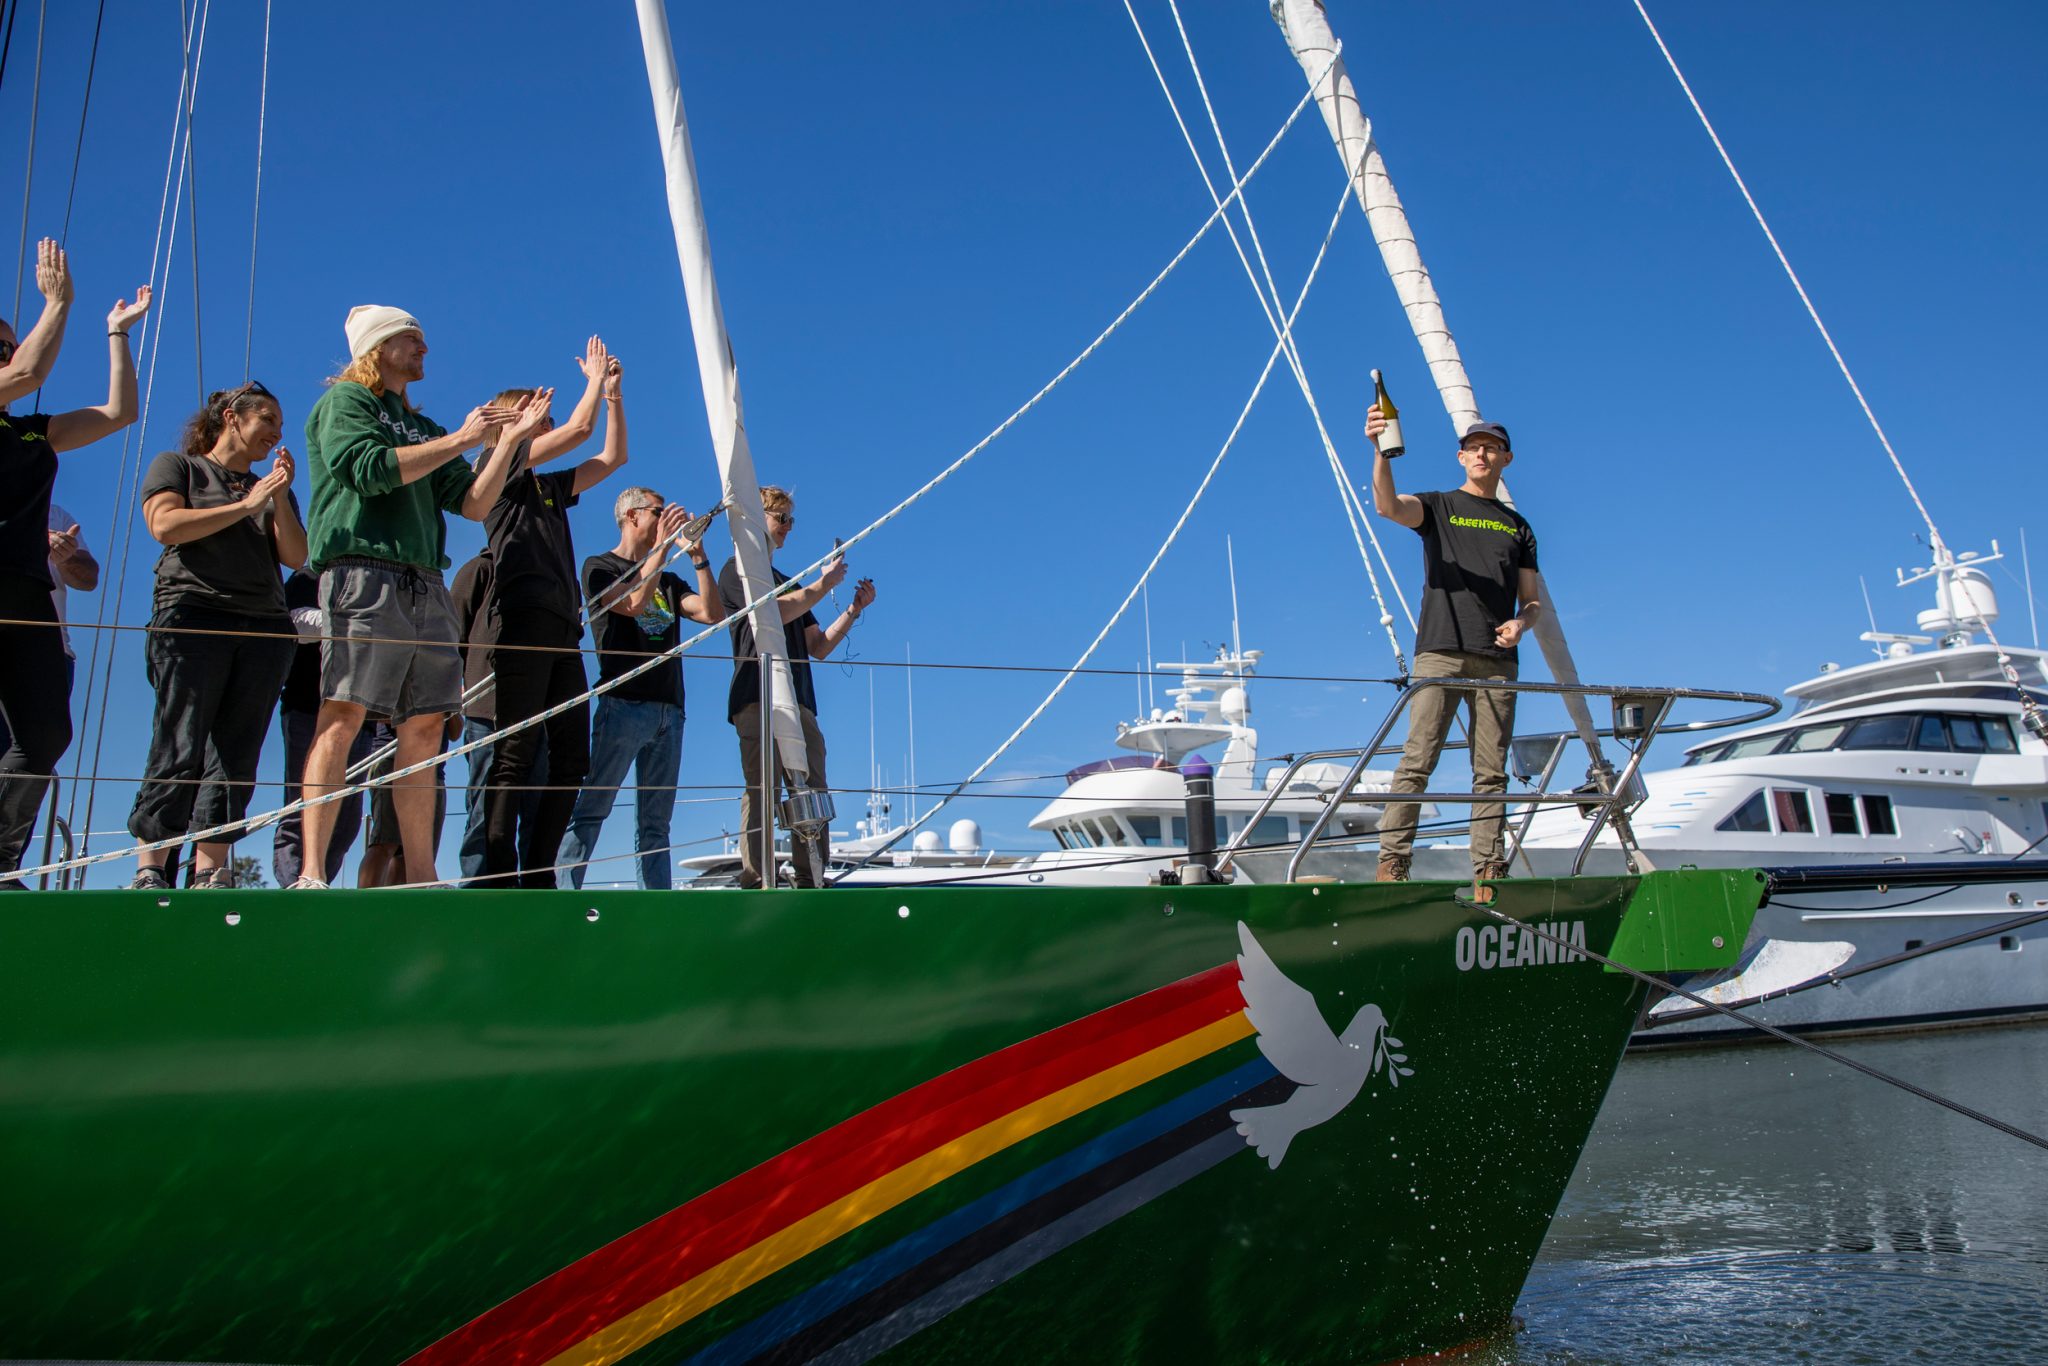 Greenpeace, Oceania, refit, Chapman Yachting